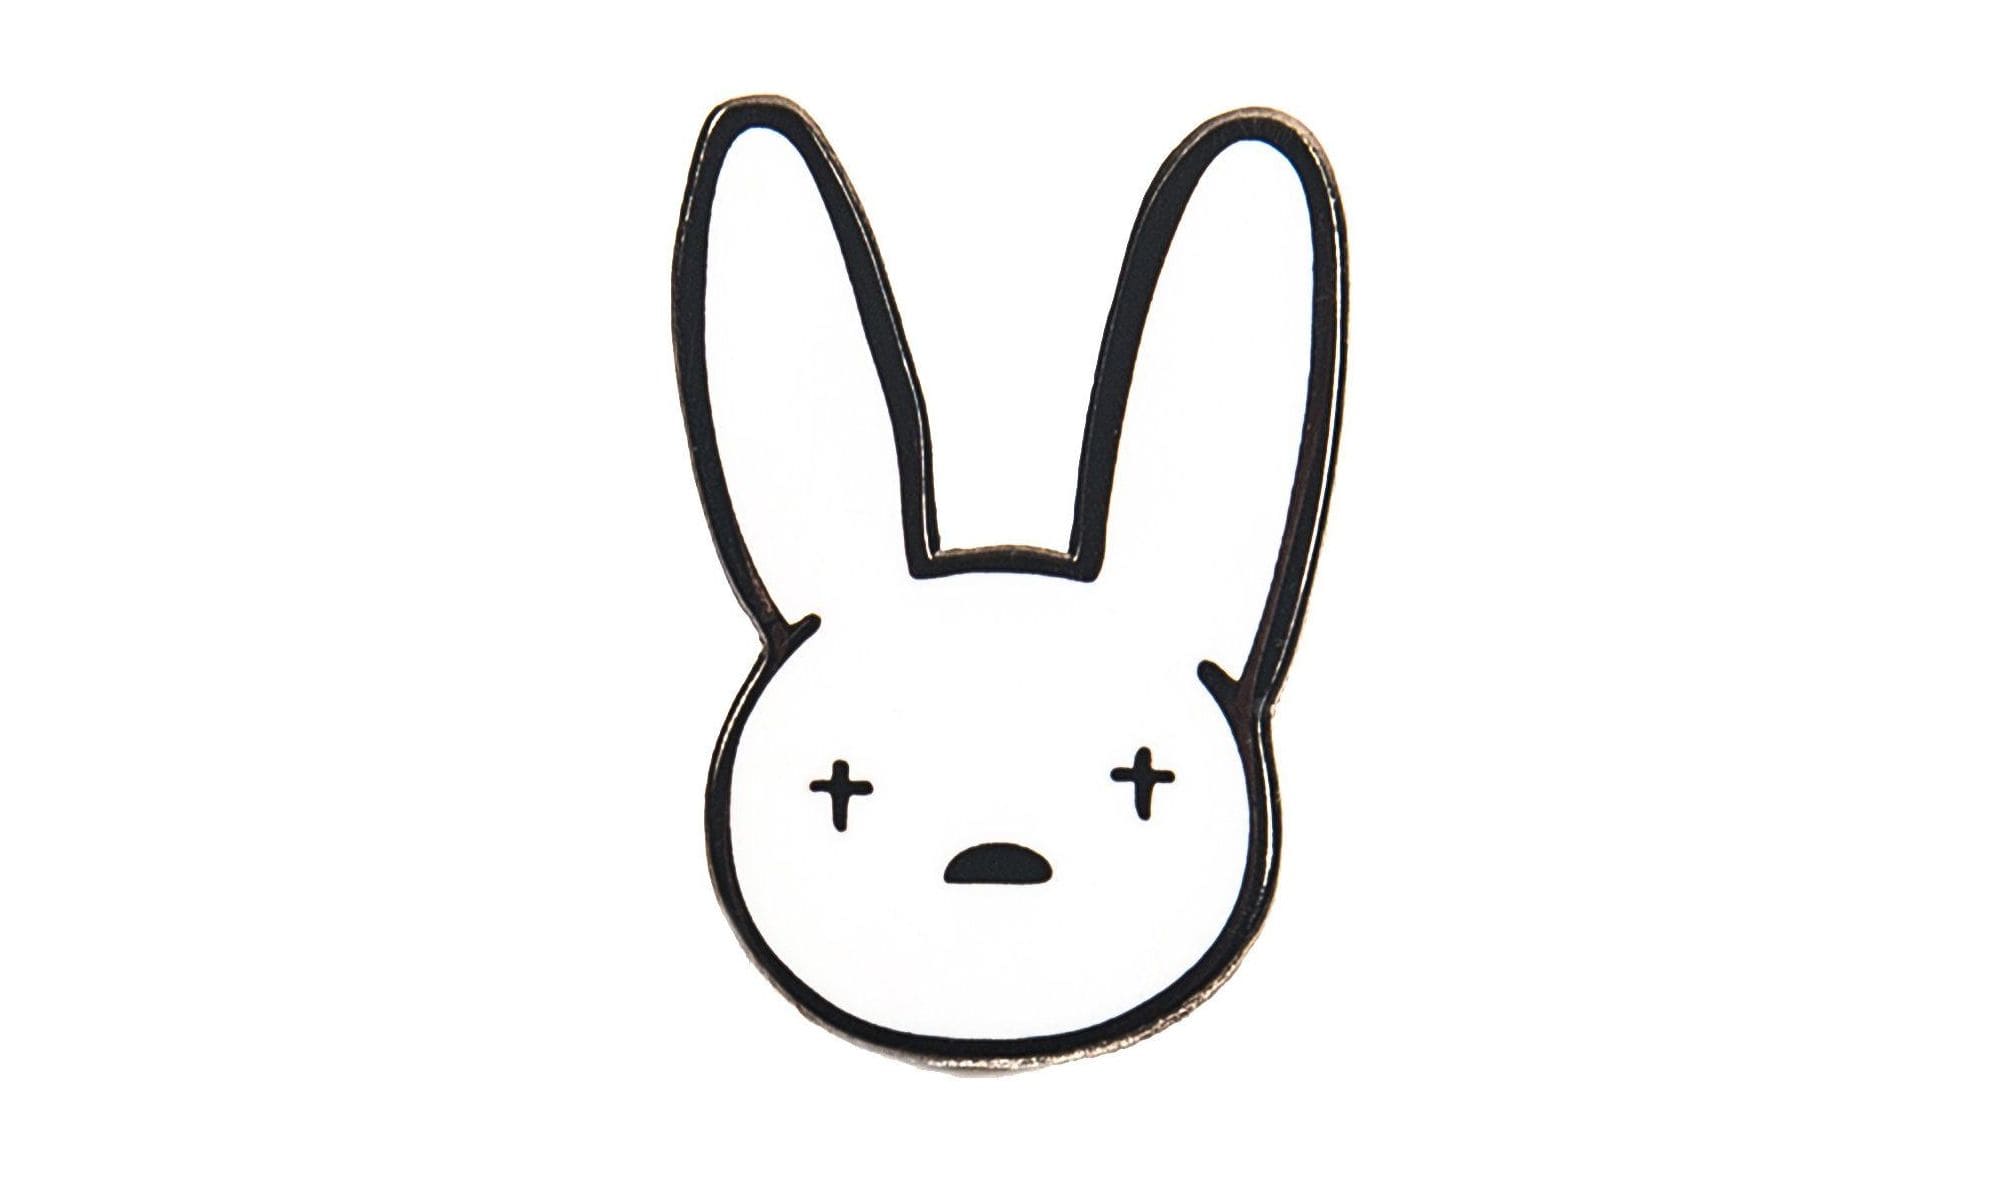 Bad Bunny Logo SVG Free